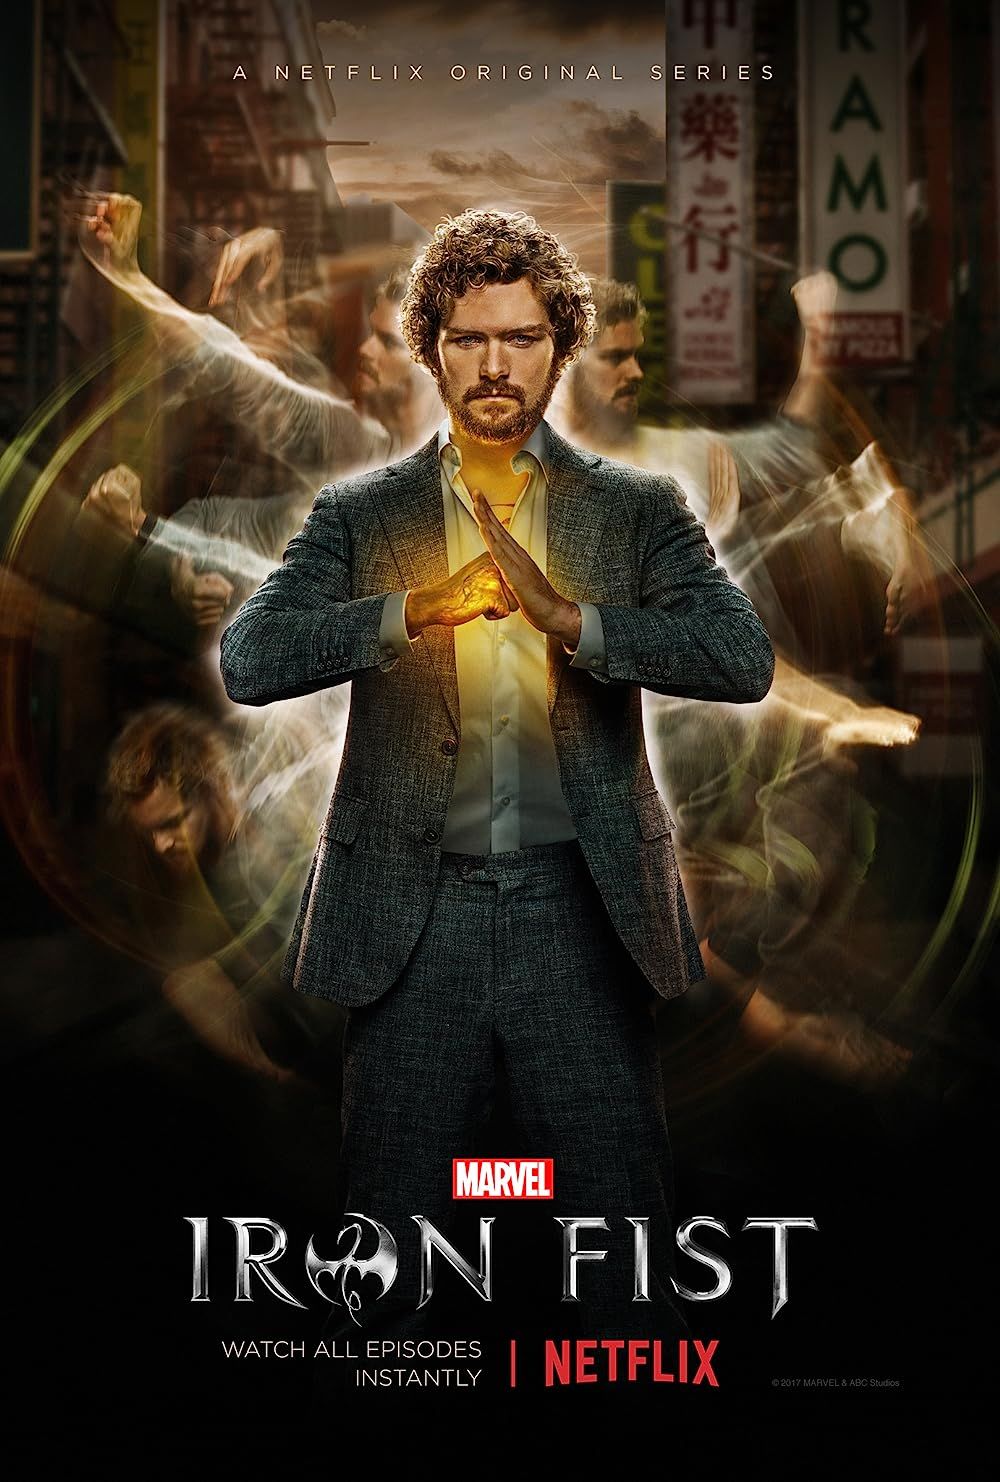 Iron First Season 2 Poster from Netflix